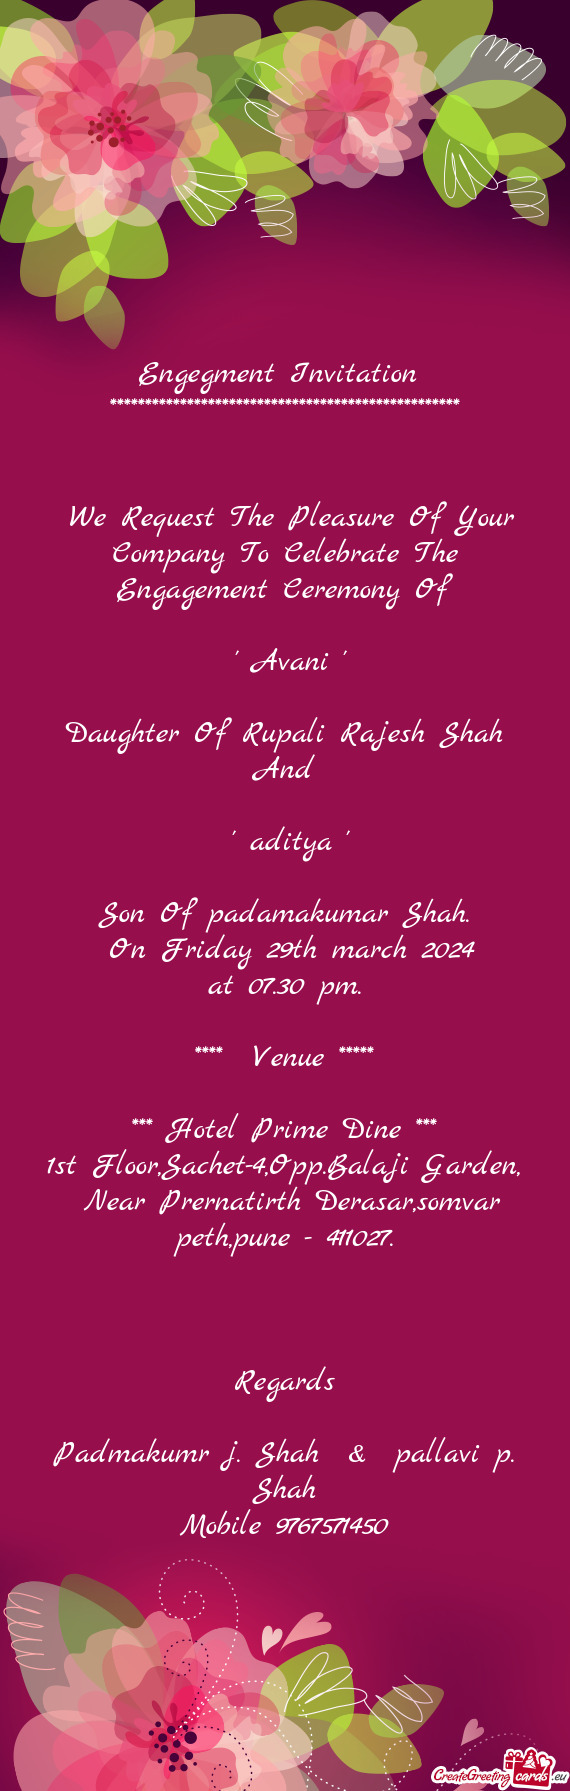 Daughter Of Rupali Rajesh Shah And